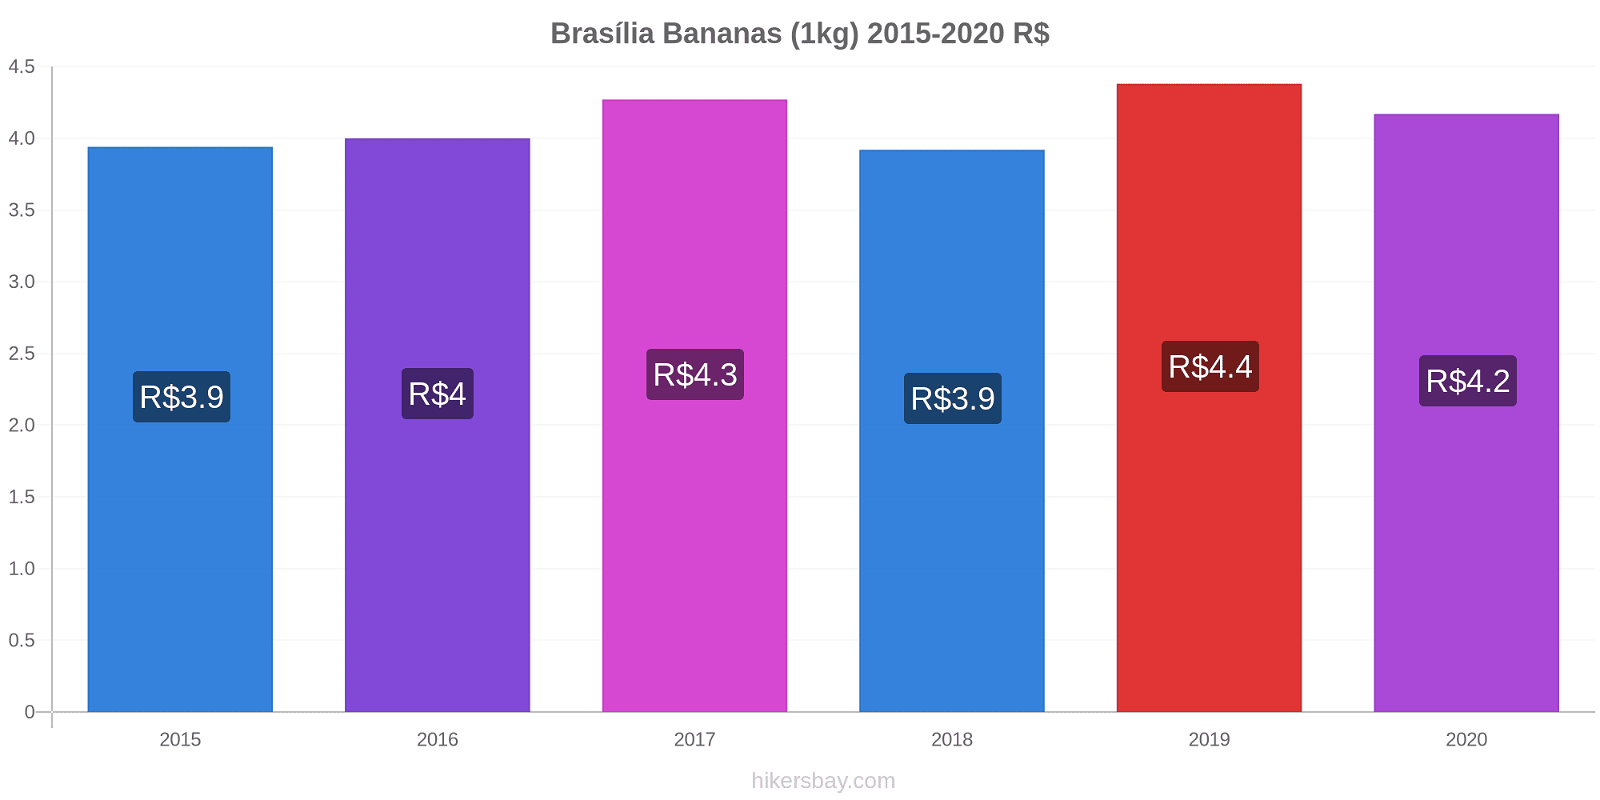 Brasília price changes Bananas (1kg) hikersbay.com